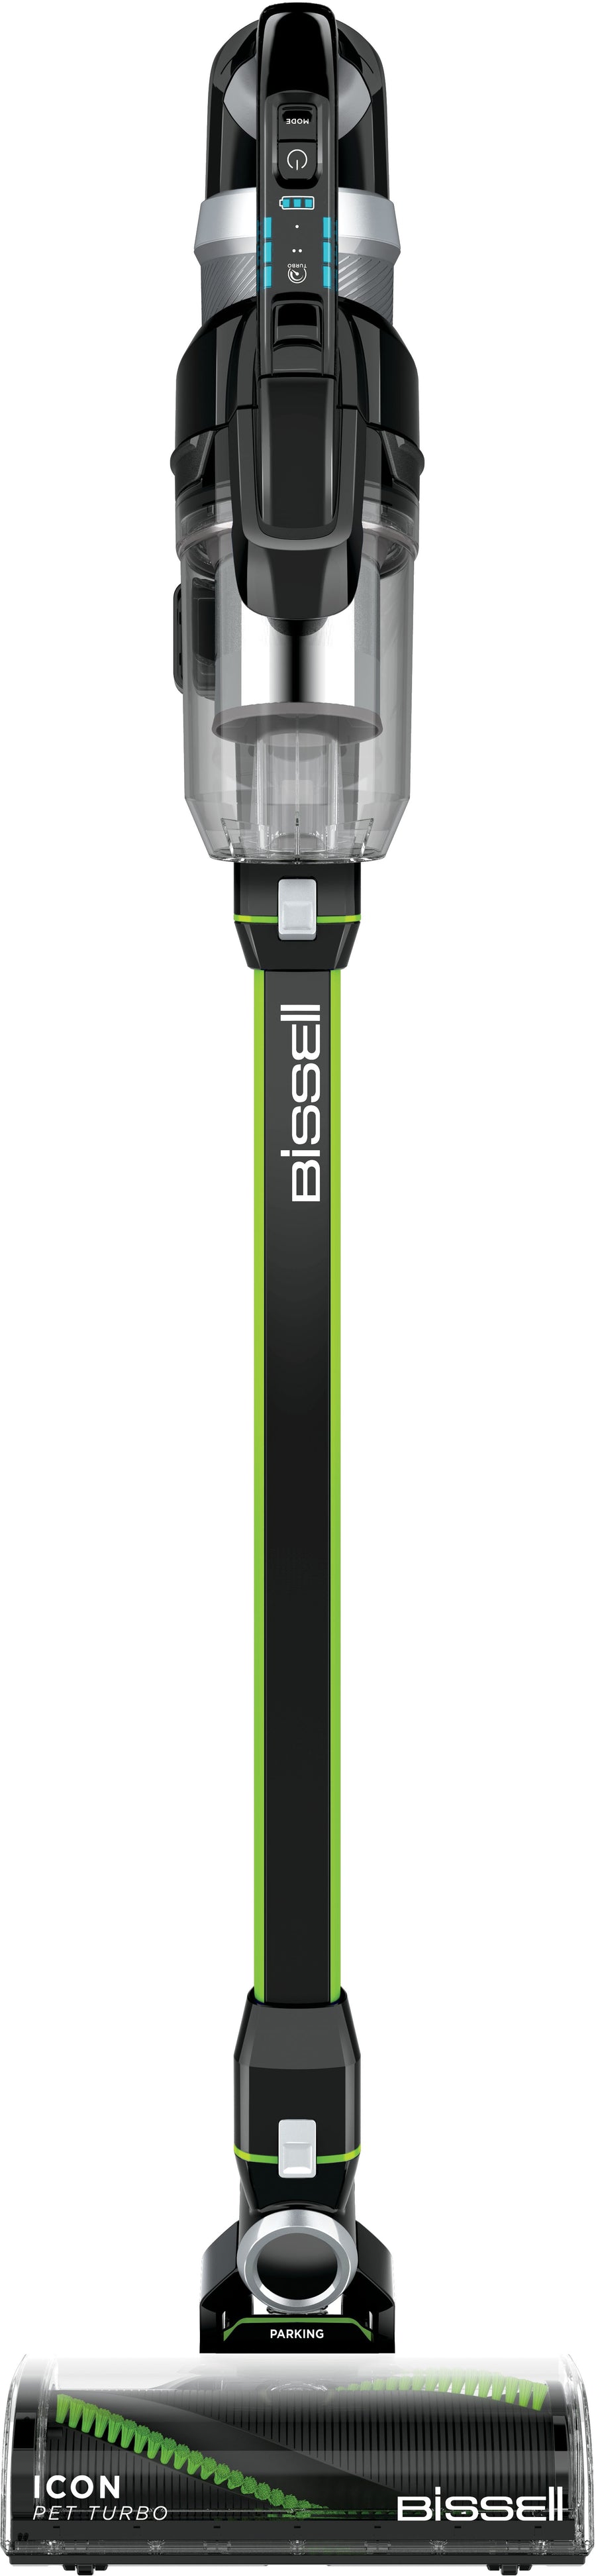 BISSELL ICONPET TURBO EDGE Cordless Stick Vacuum - Black, Cha Cha Lime_0